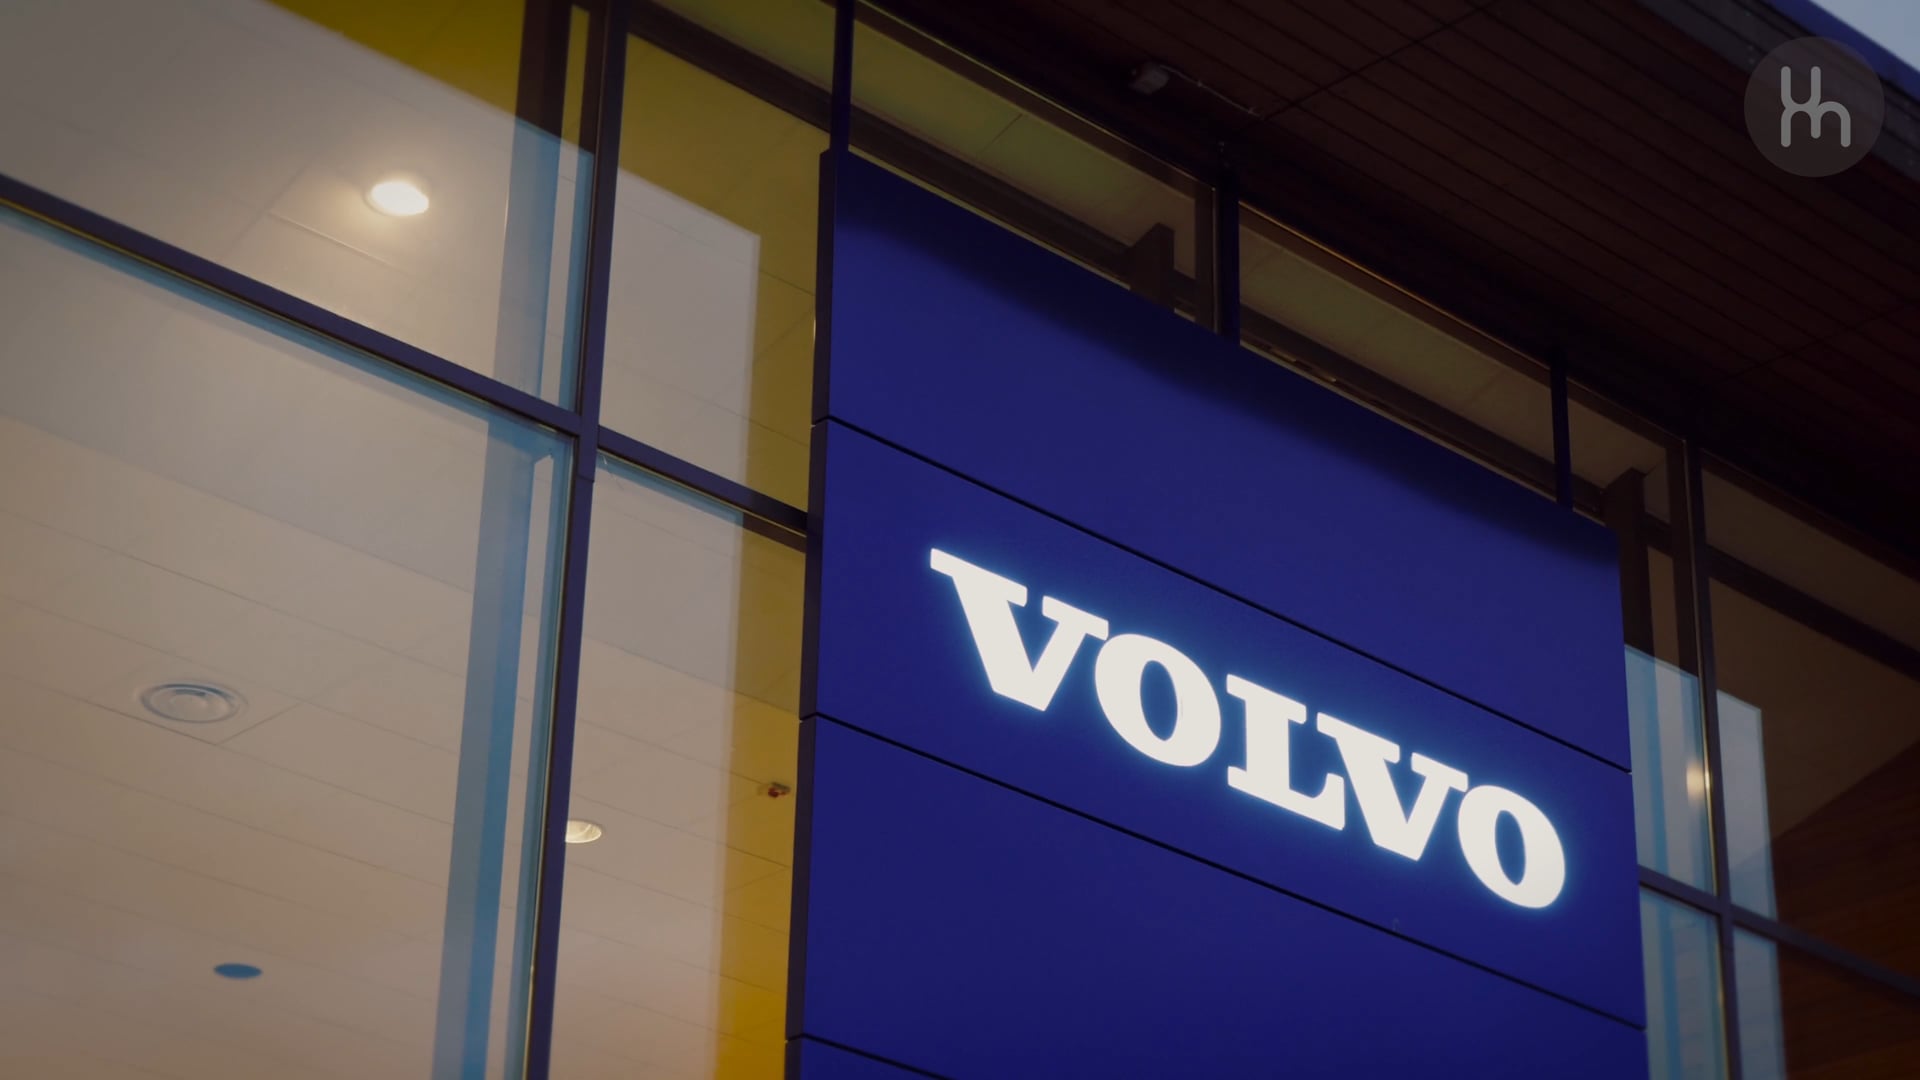 UPPLANDS MOTOR - Volvo Service